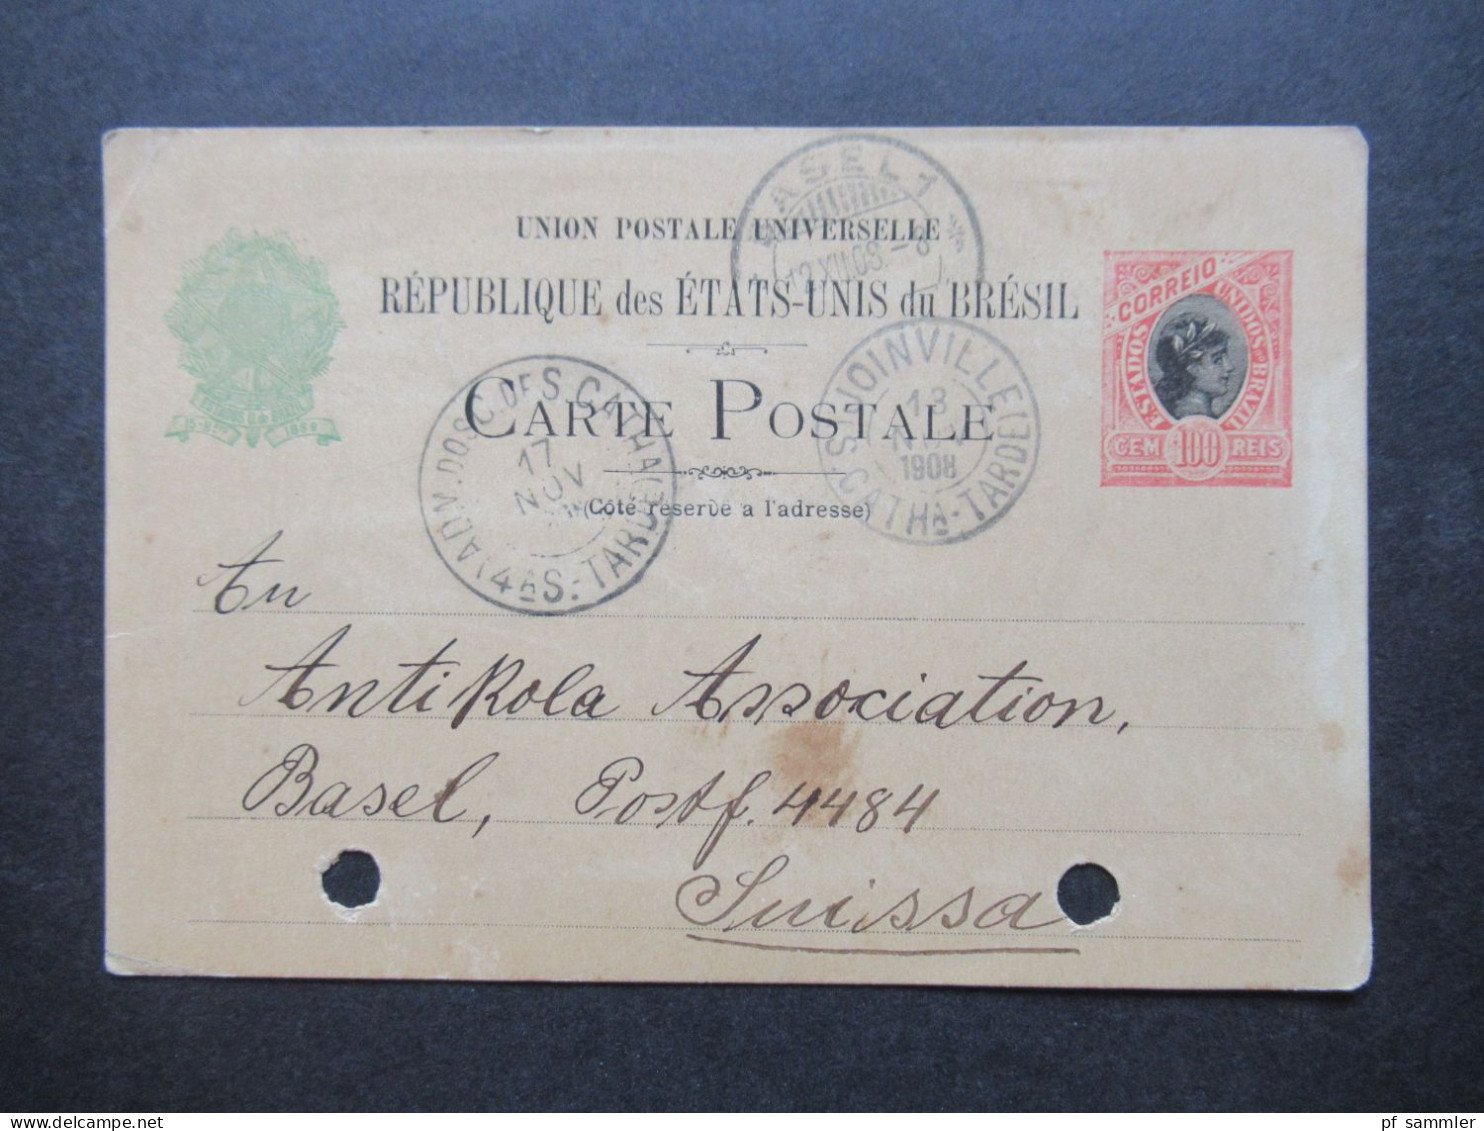 Brasilien 1908 Ganzsache 100 Reis Auslandsverwendung Joinville - Basel Schweiz Stp. Adm. Dosc. Des Catha 4As Tarde - Postal Stationery